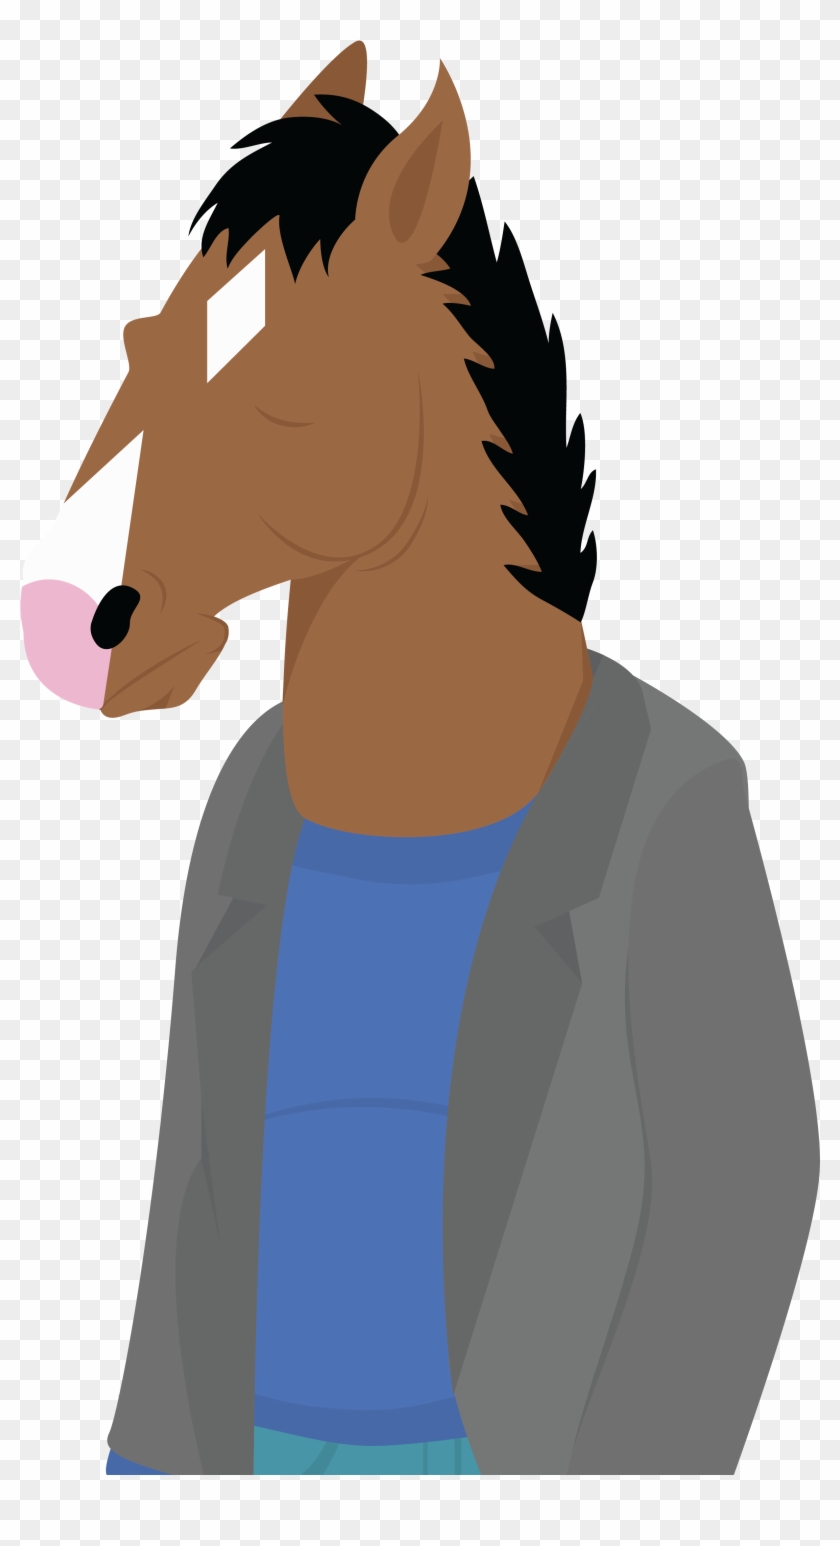 Horse Netflix Pony Fan Art - Horse Netflix Pony Fan Art #532078